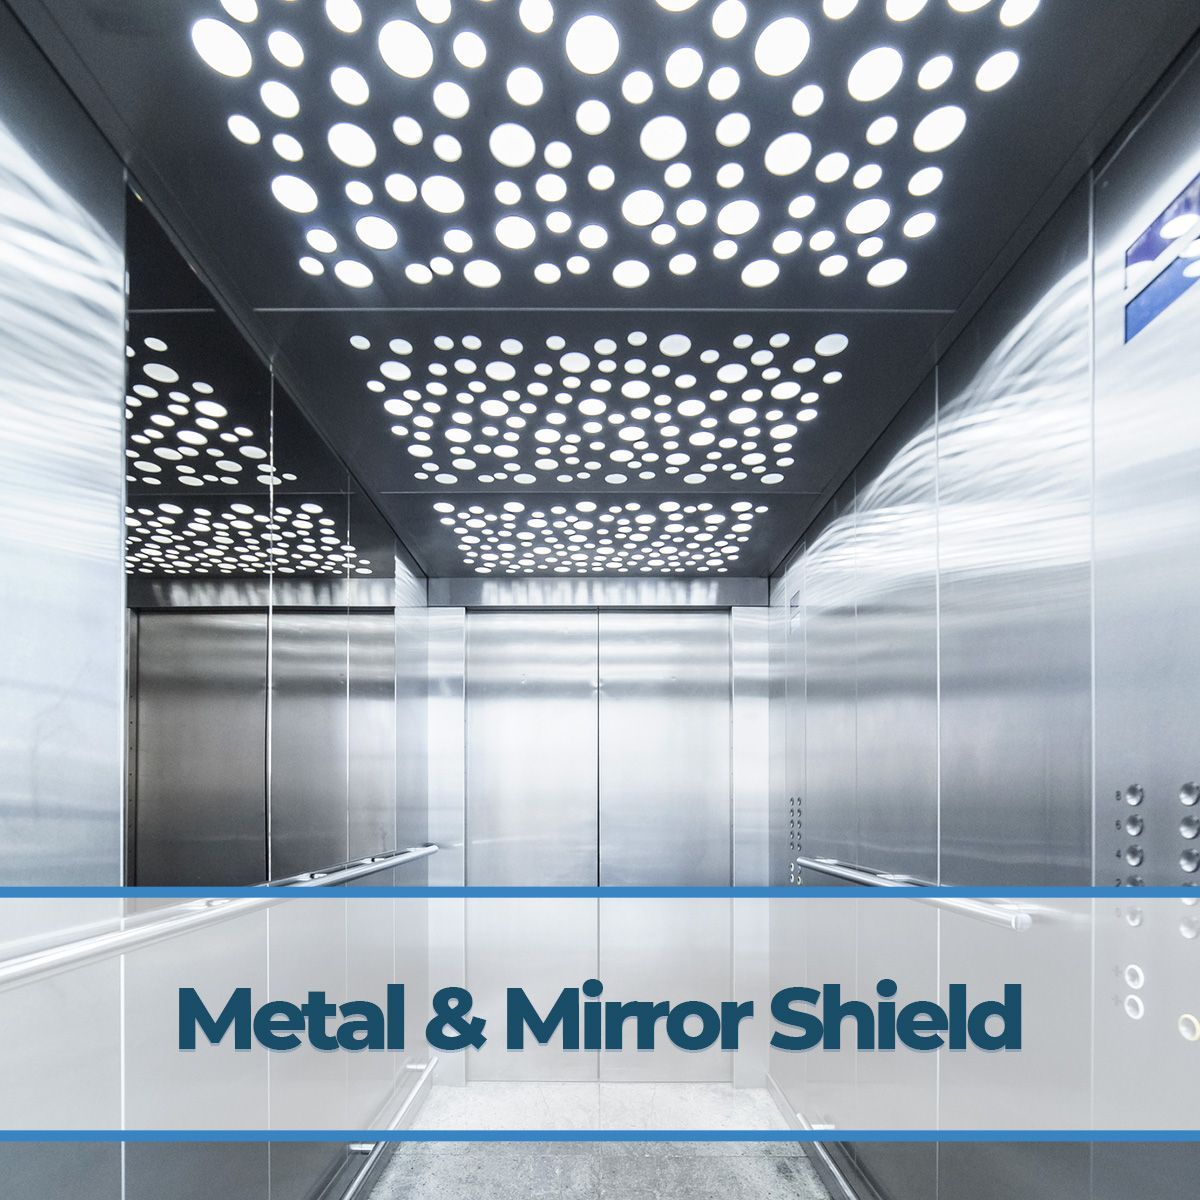 Metal & Mirror Shield